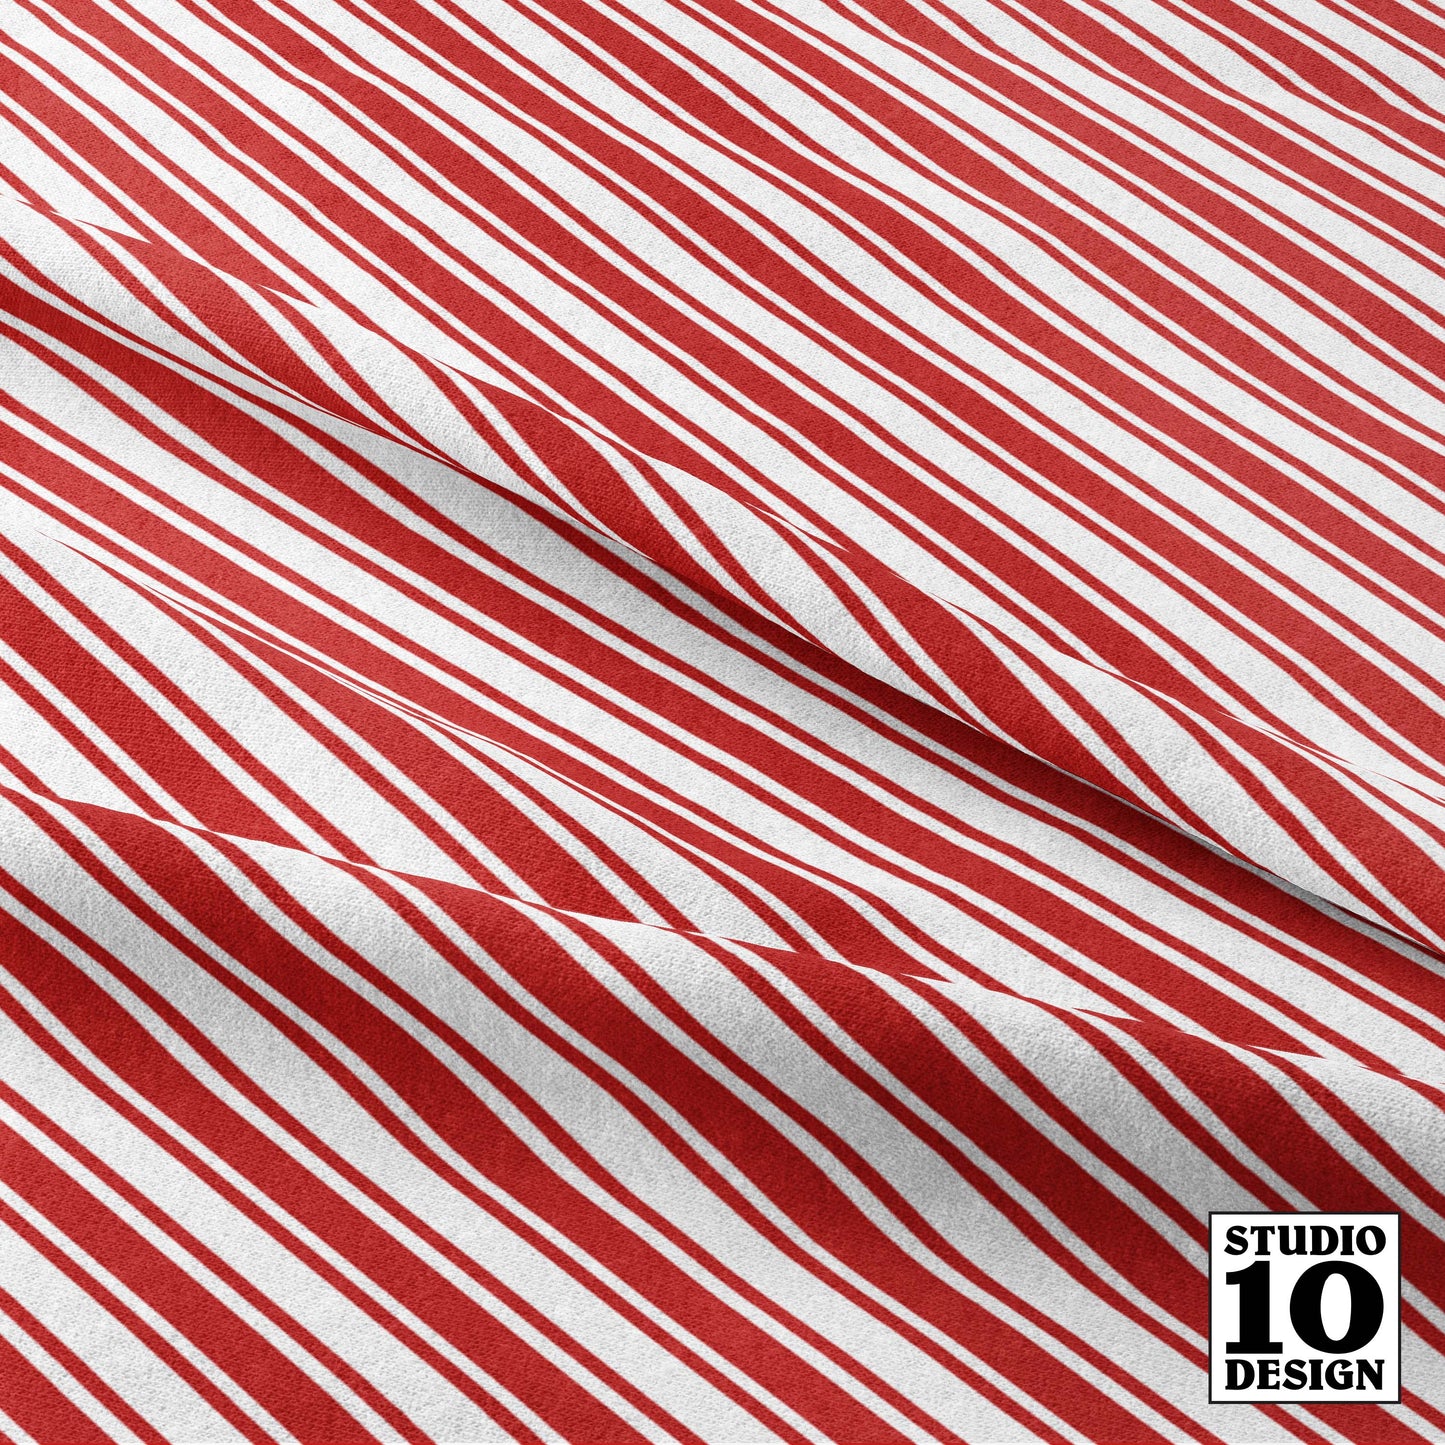 Manteles redondos a rayas de bastón de caramelo rojo y blanco